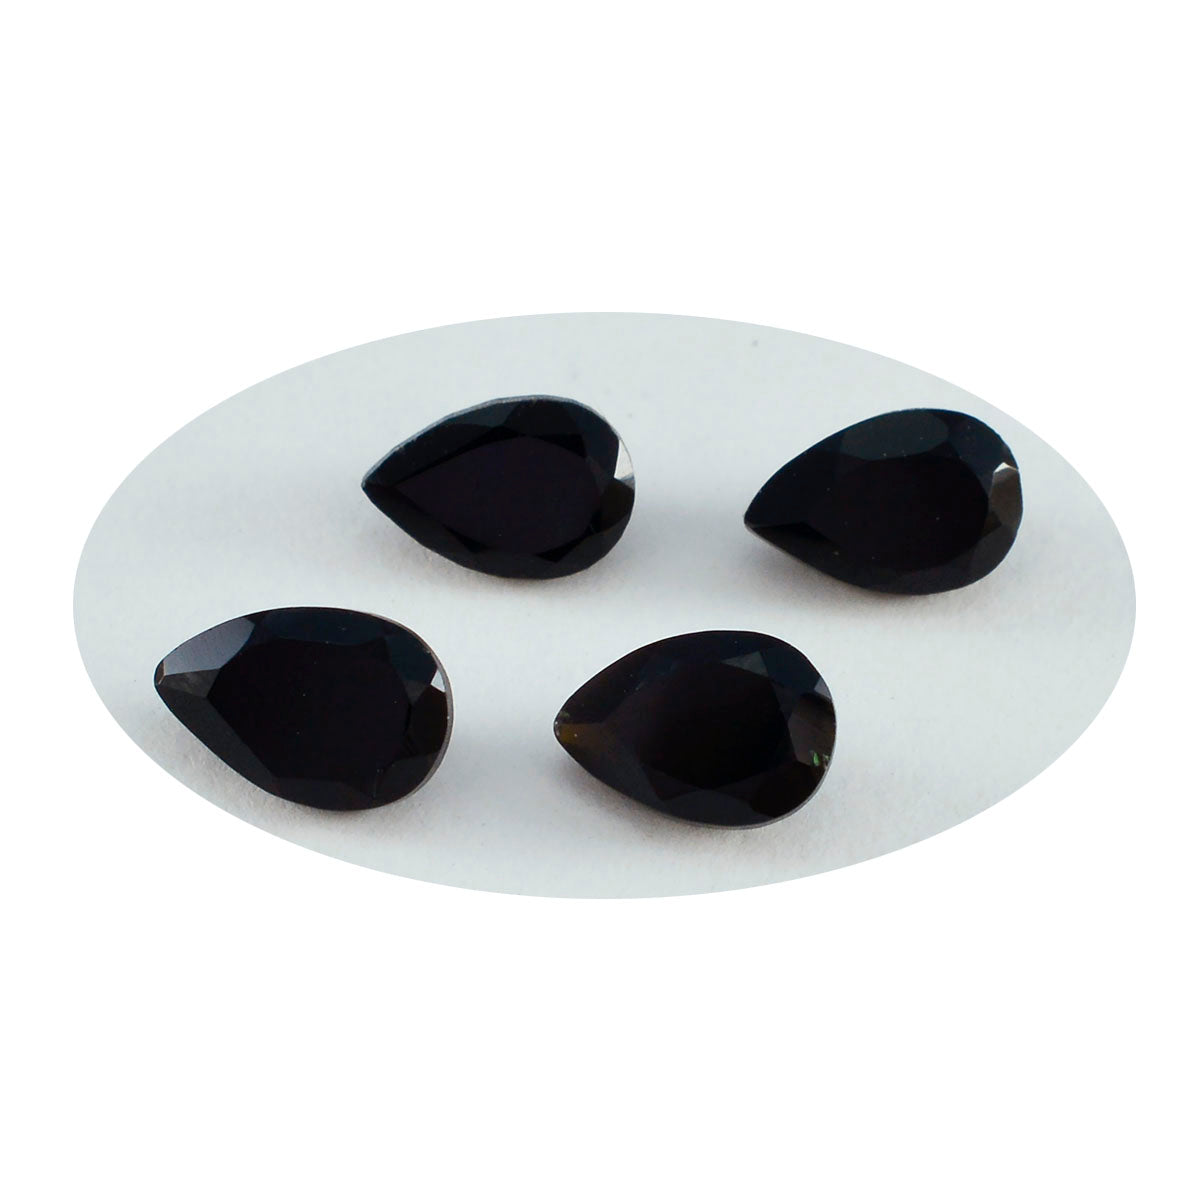 Riyogems 1PC Natural Black Onyx Faceted 4x6 mm Pear Shape cute Quality Loose Stone